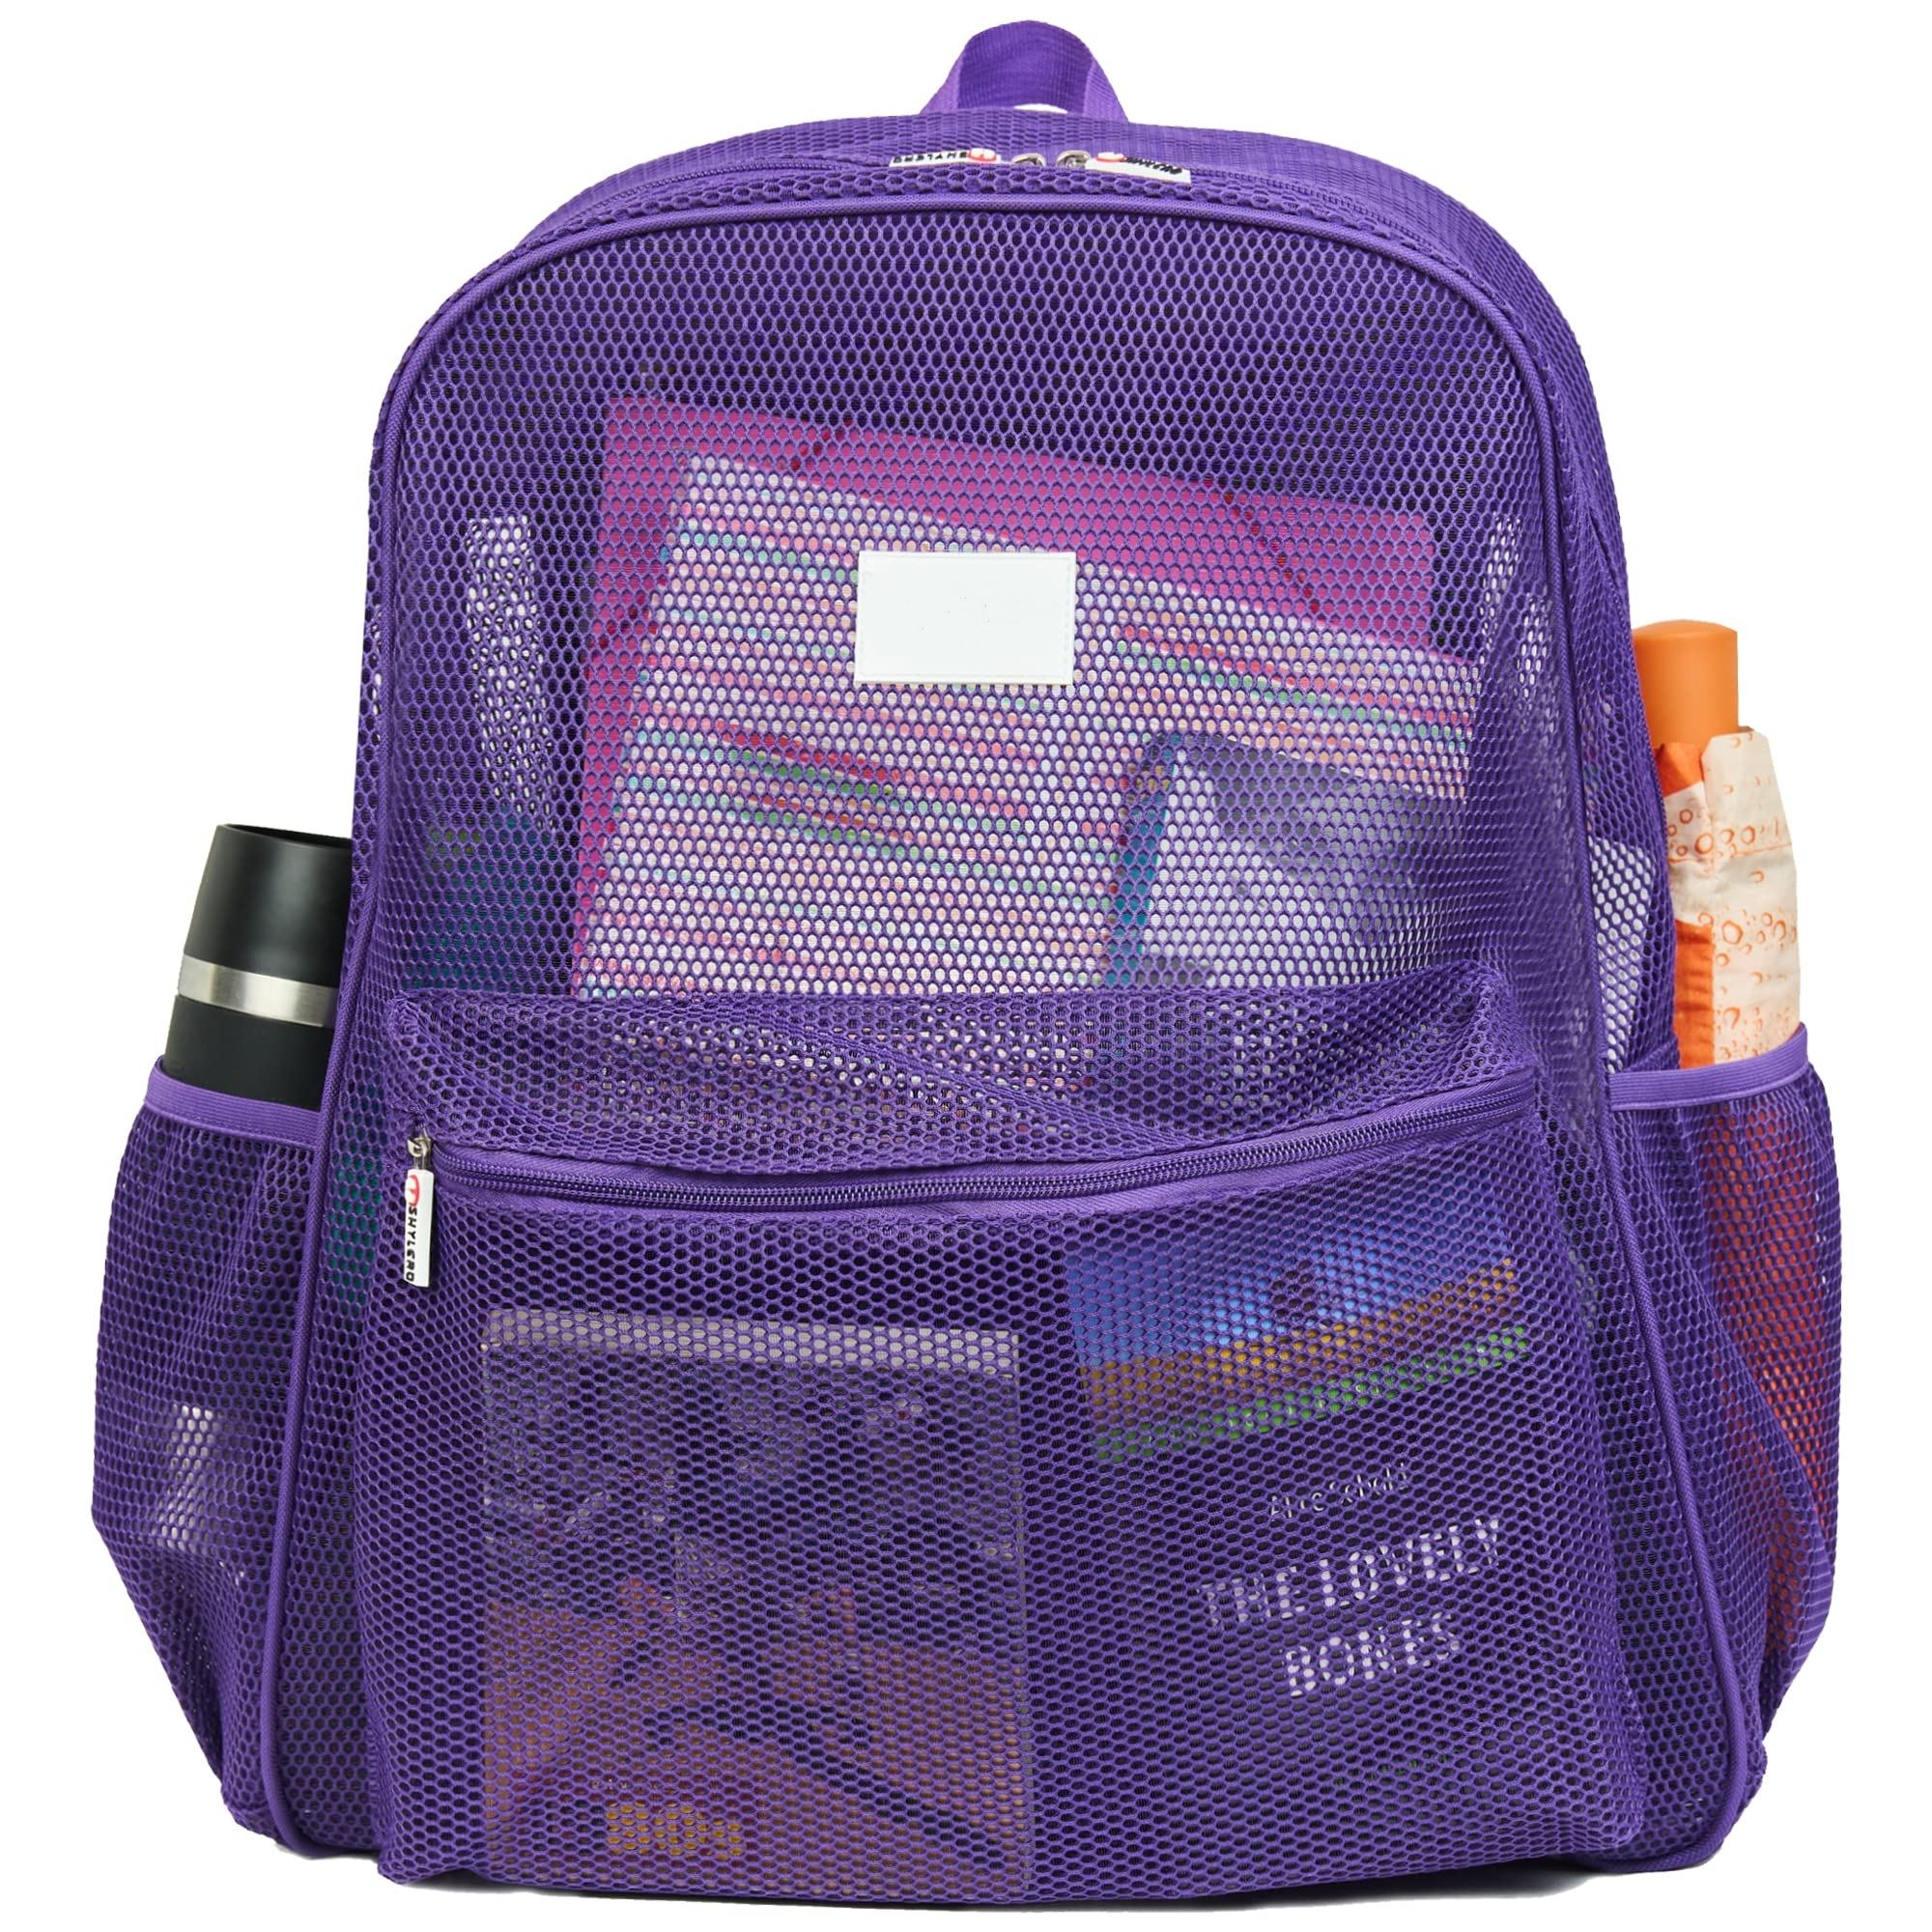 Transparent Mesh Backpacks for School Travel